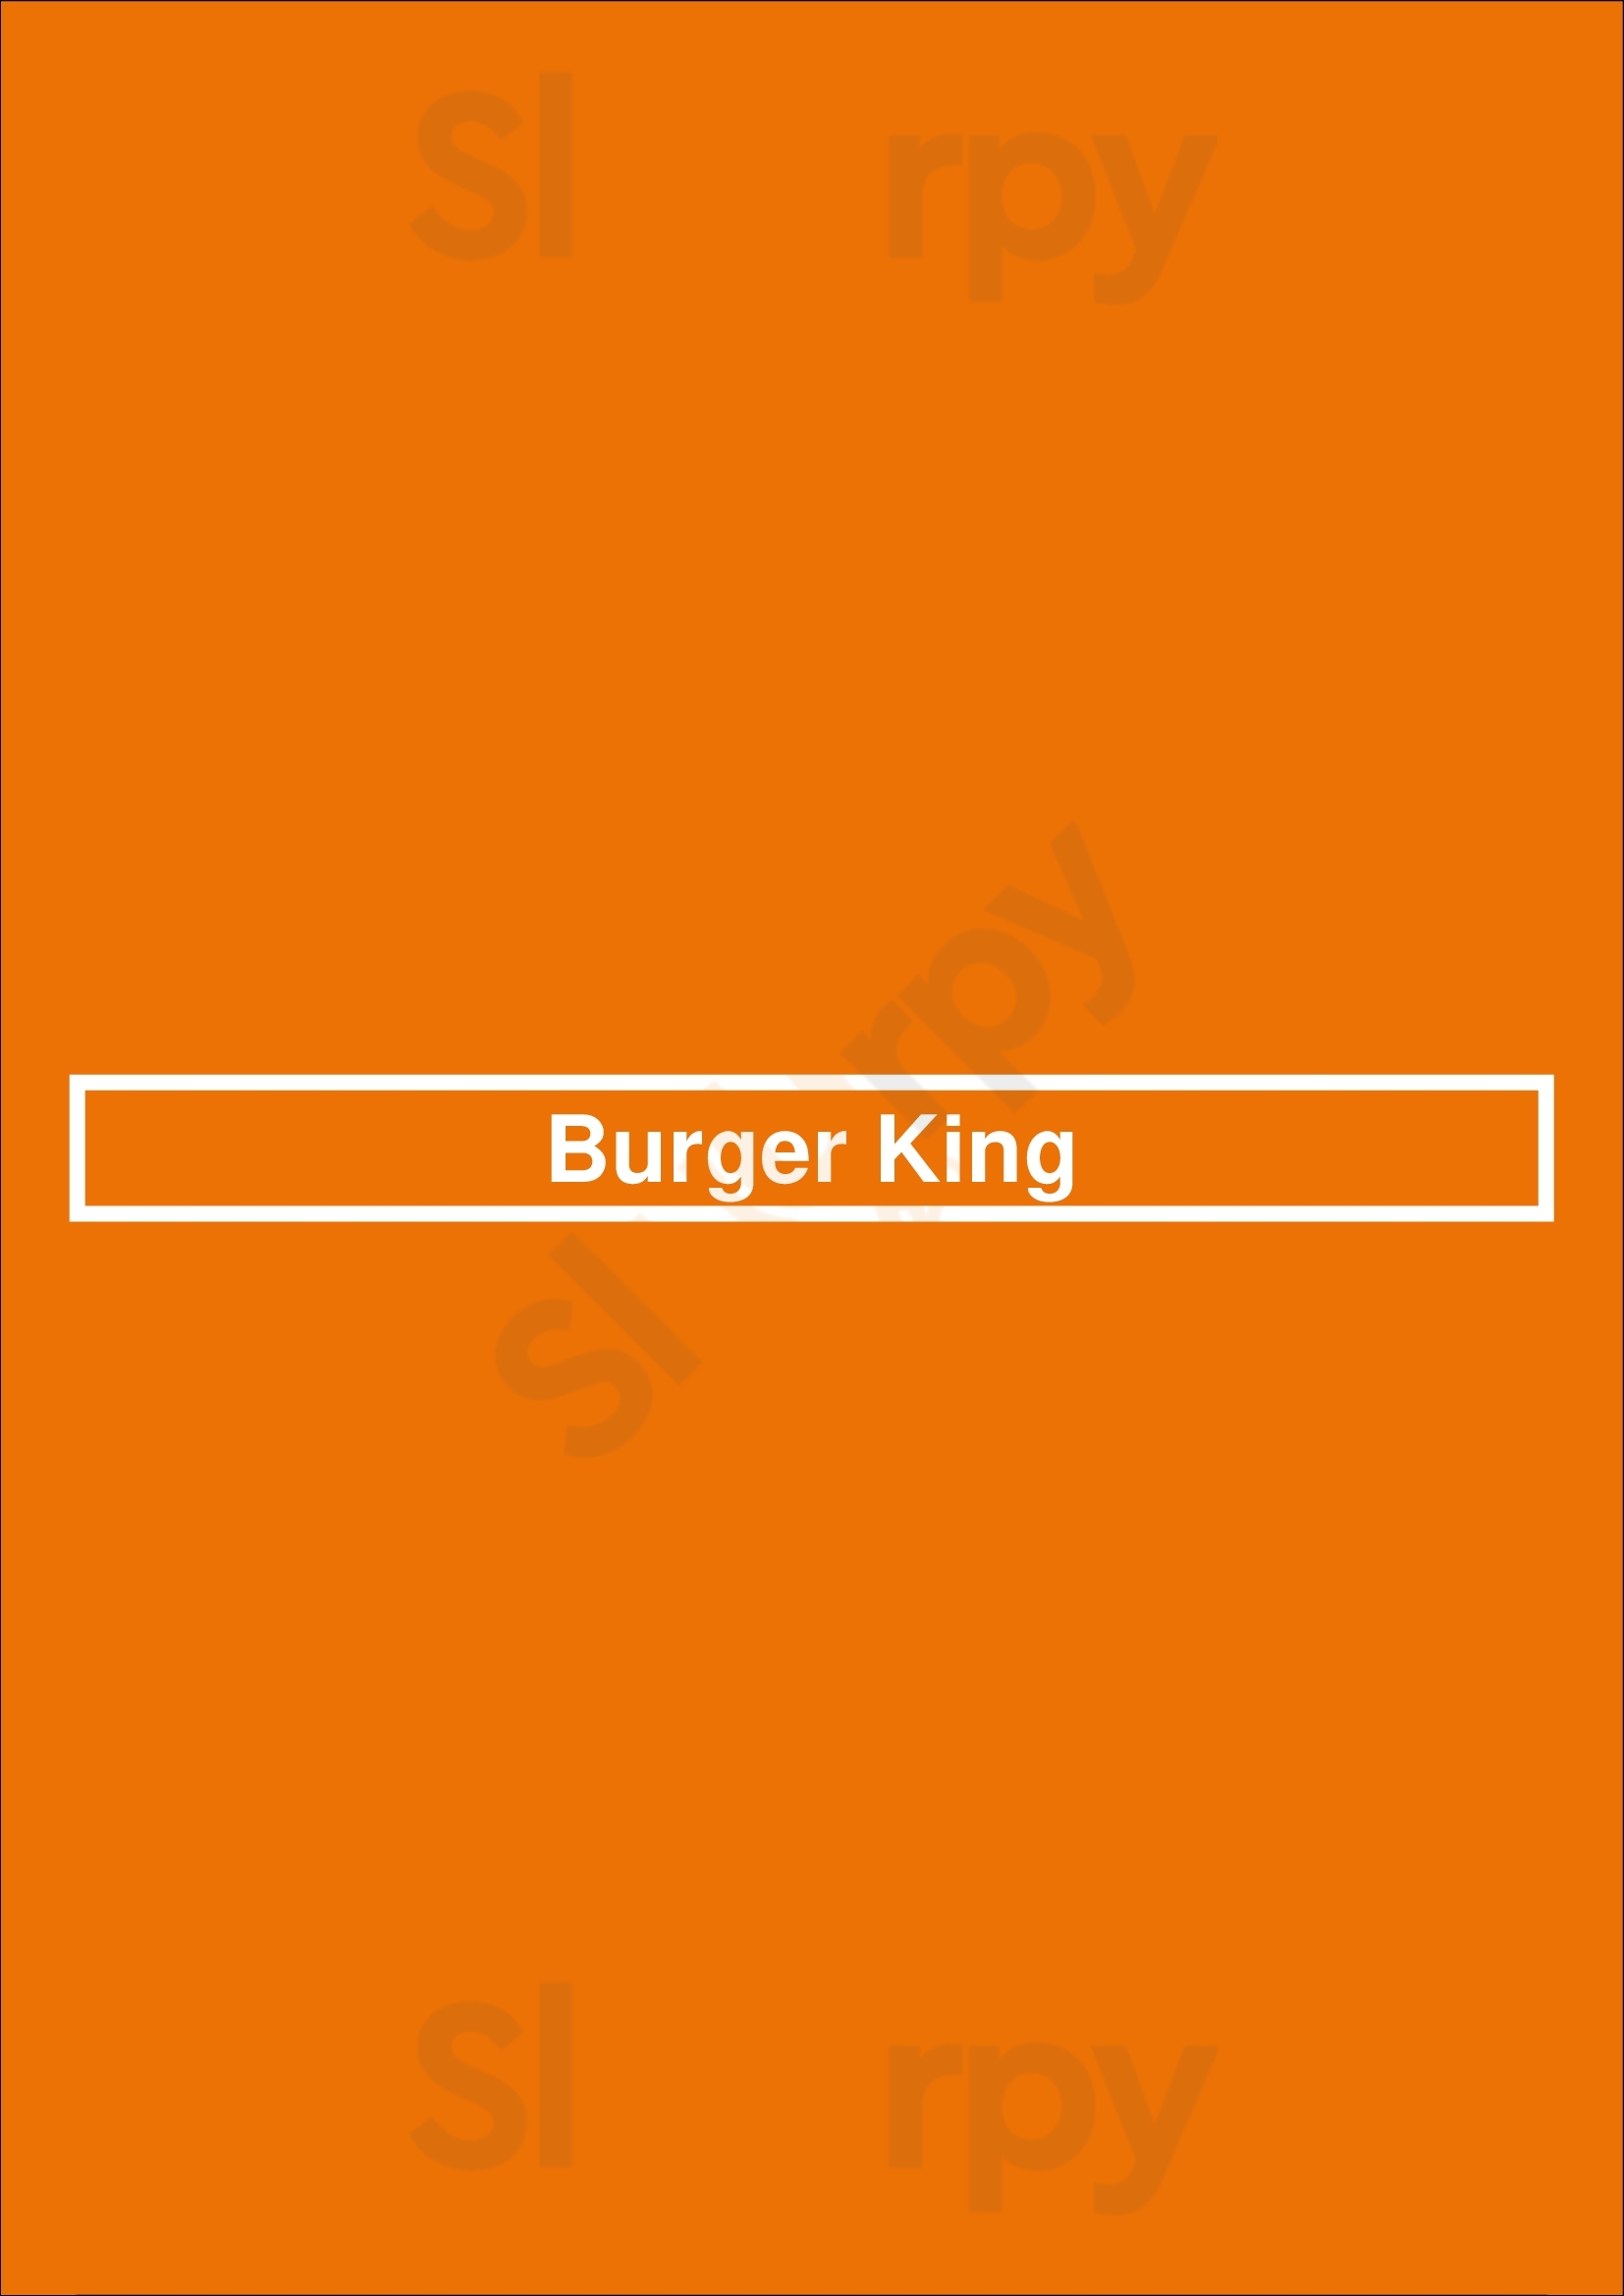 Burger King Cleveland Menu - 1